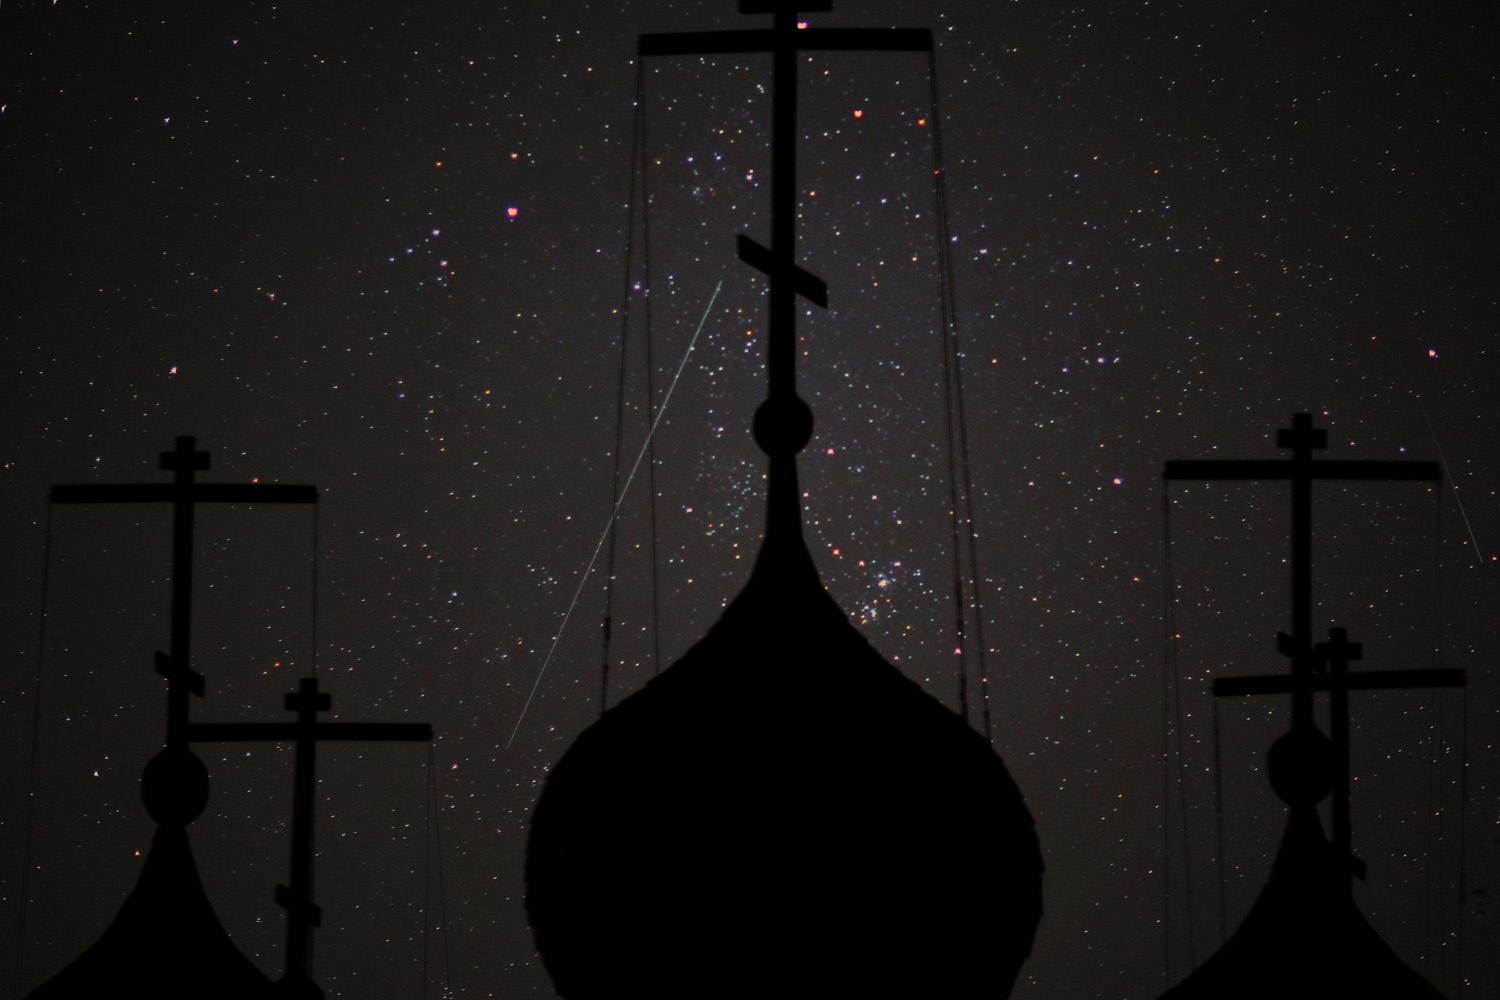 Falling stars: Perseid meteor shower 2013 in Ivanovo Region